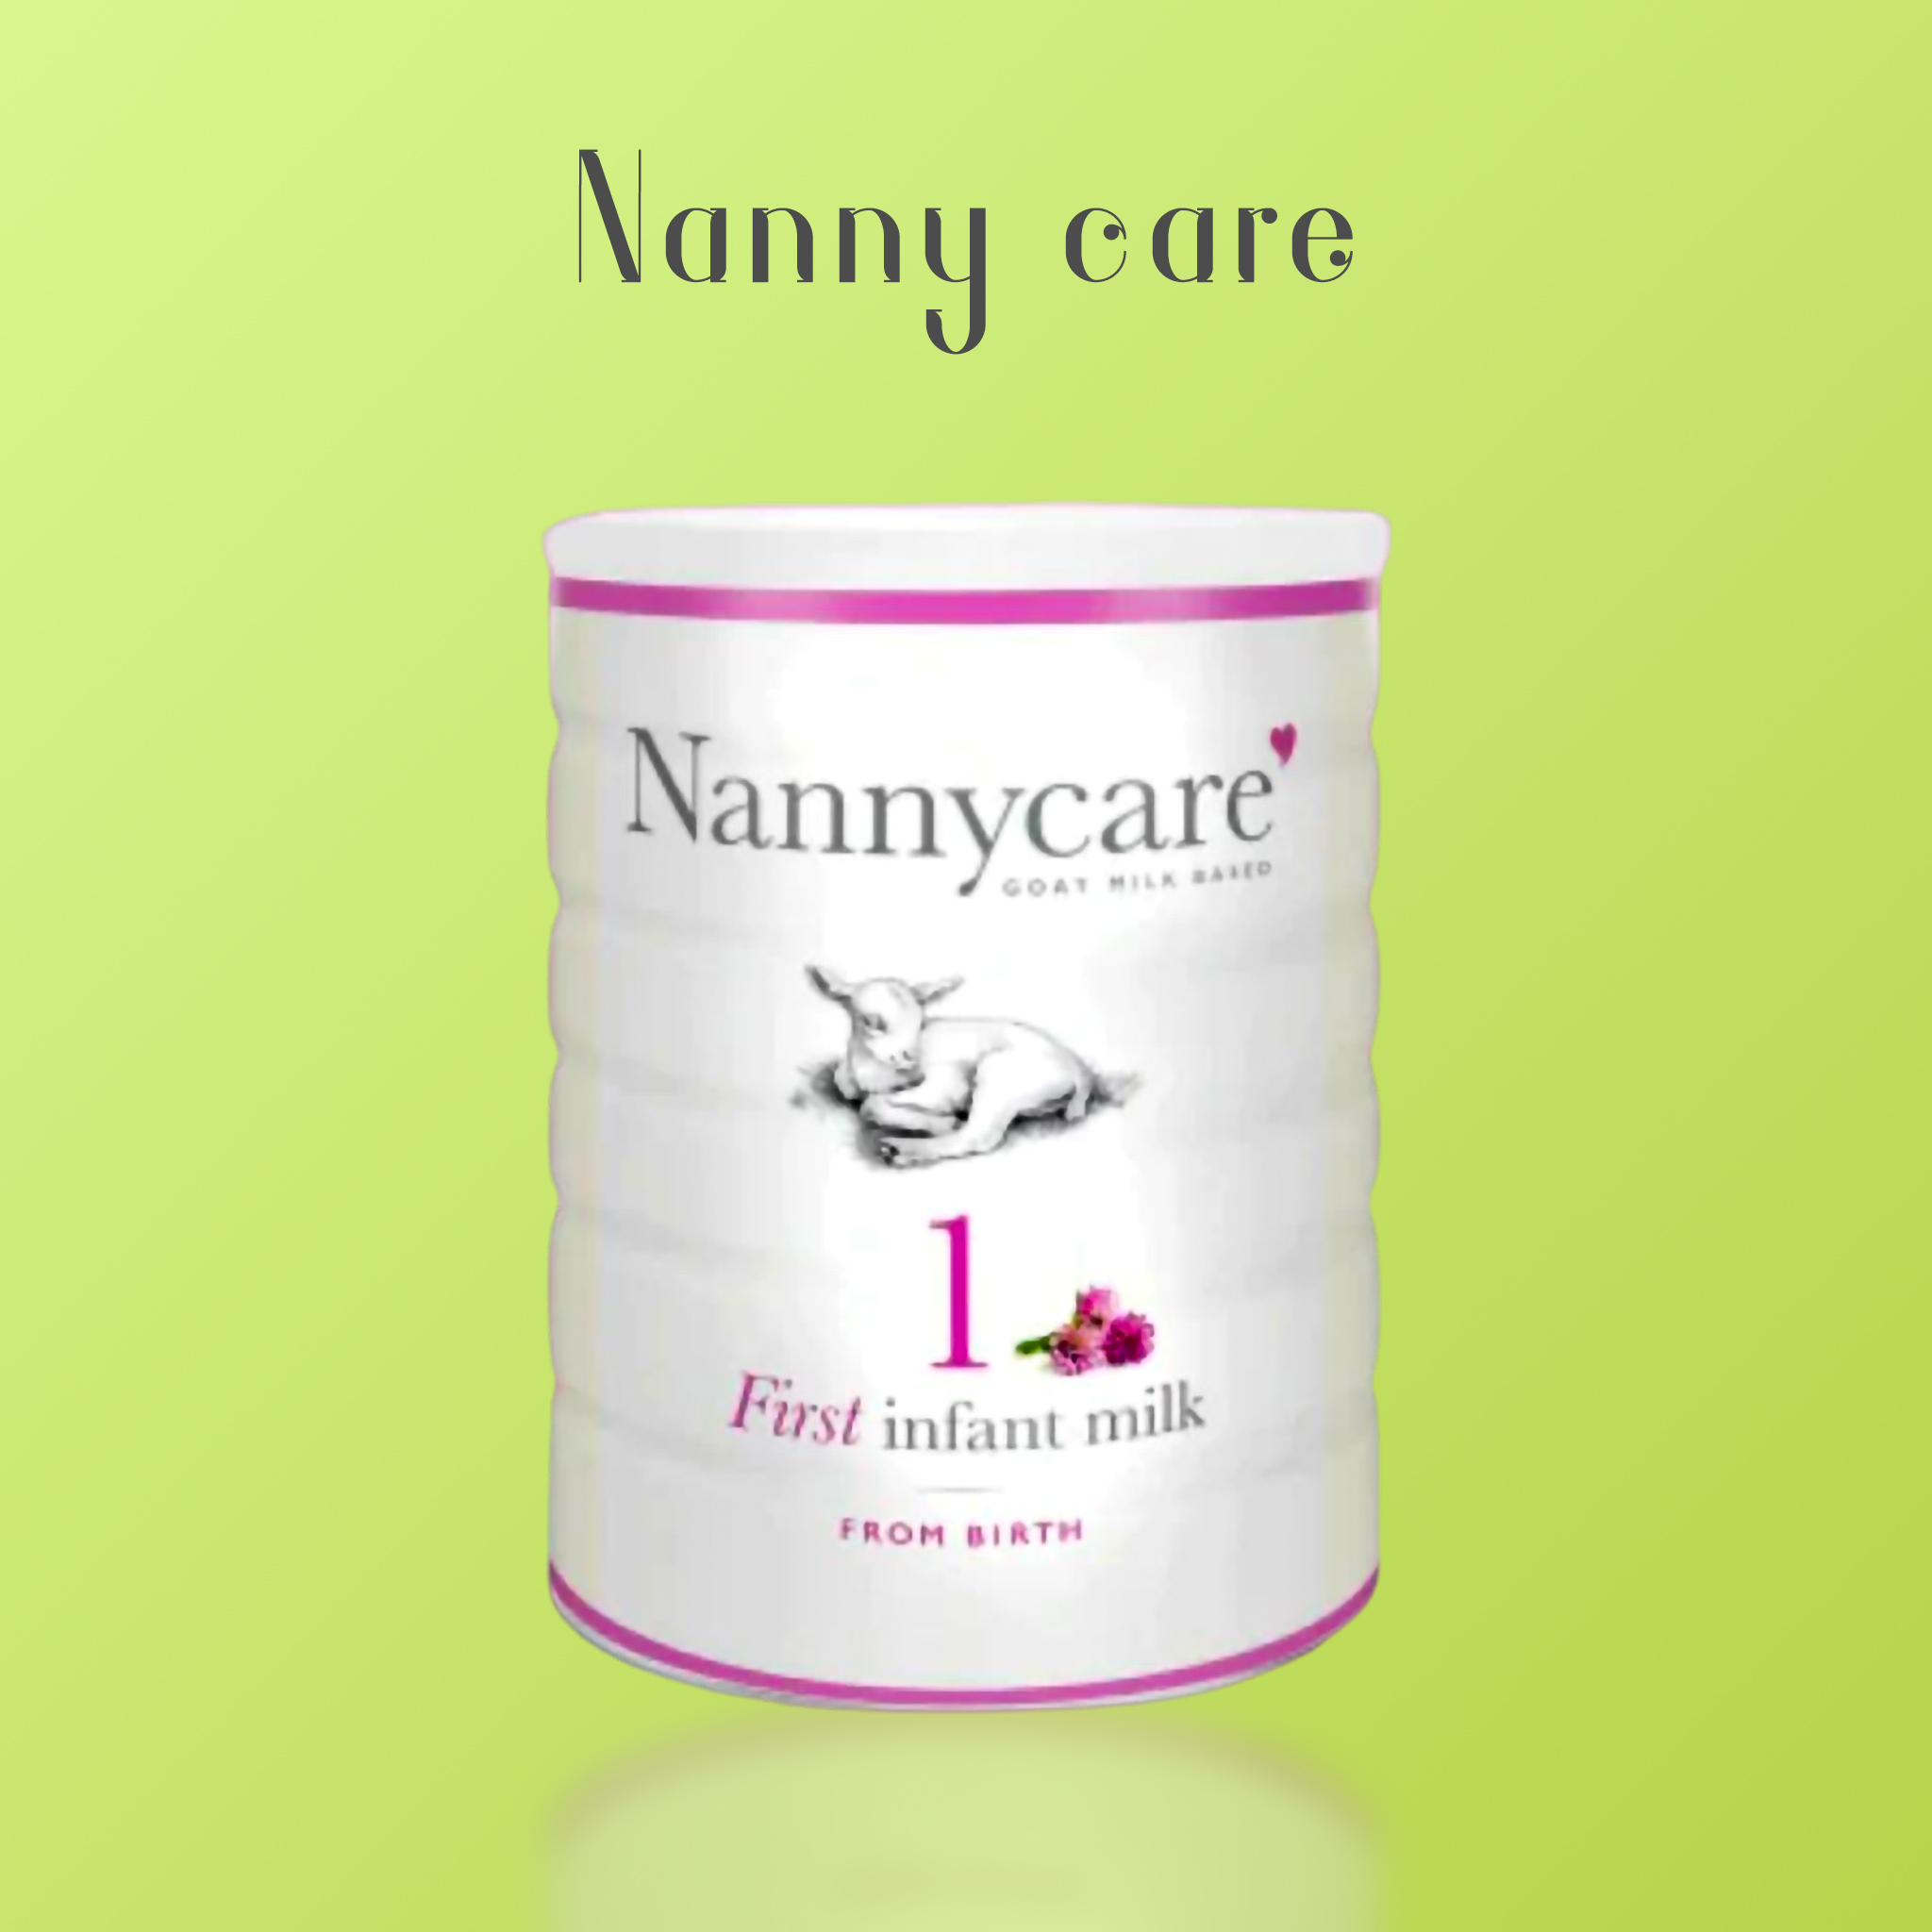 nannycare formula